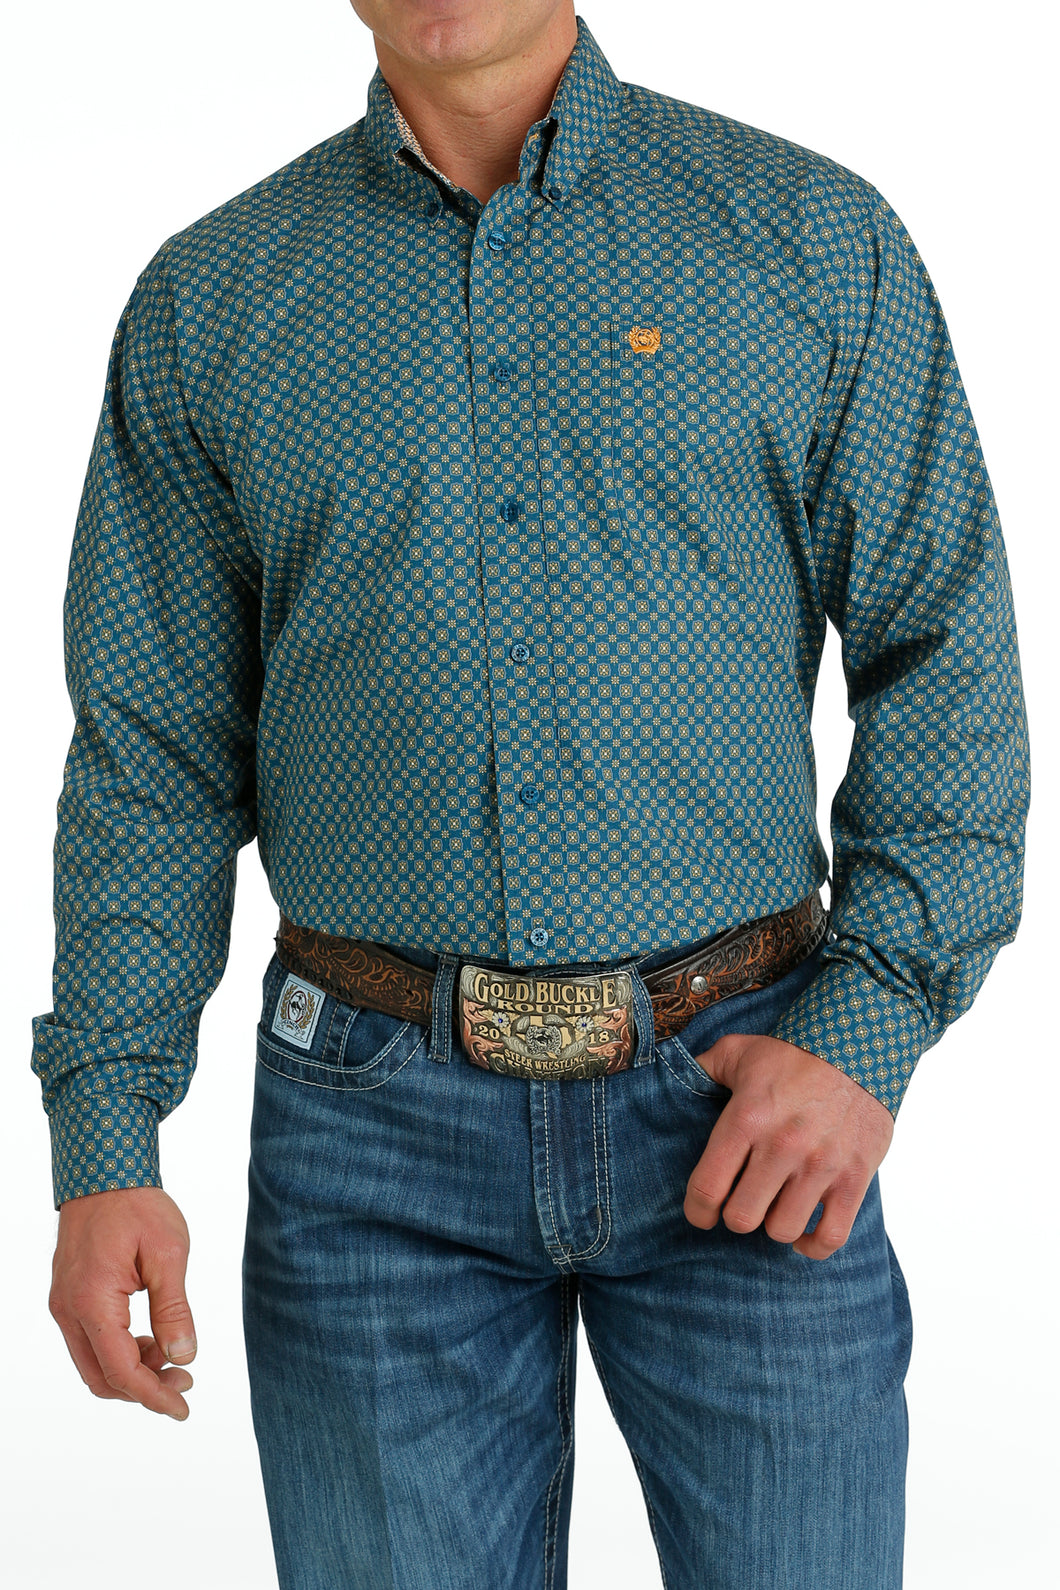 Pard's Western Shop Men's Cinch Blue/Orange Geometric Print Button-Down Shirt